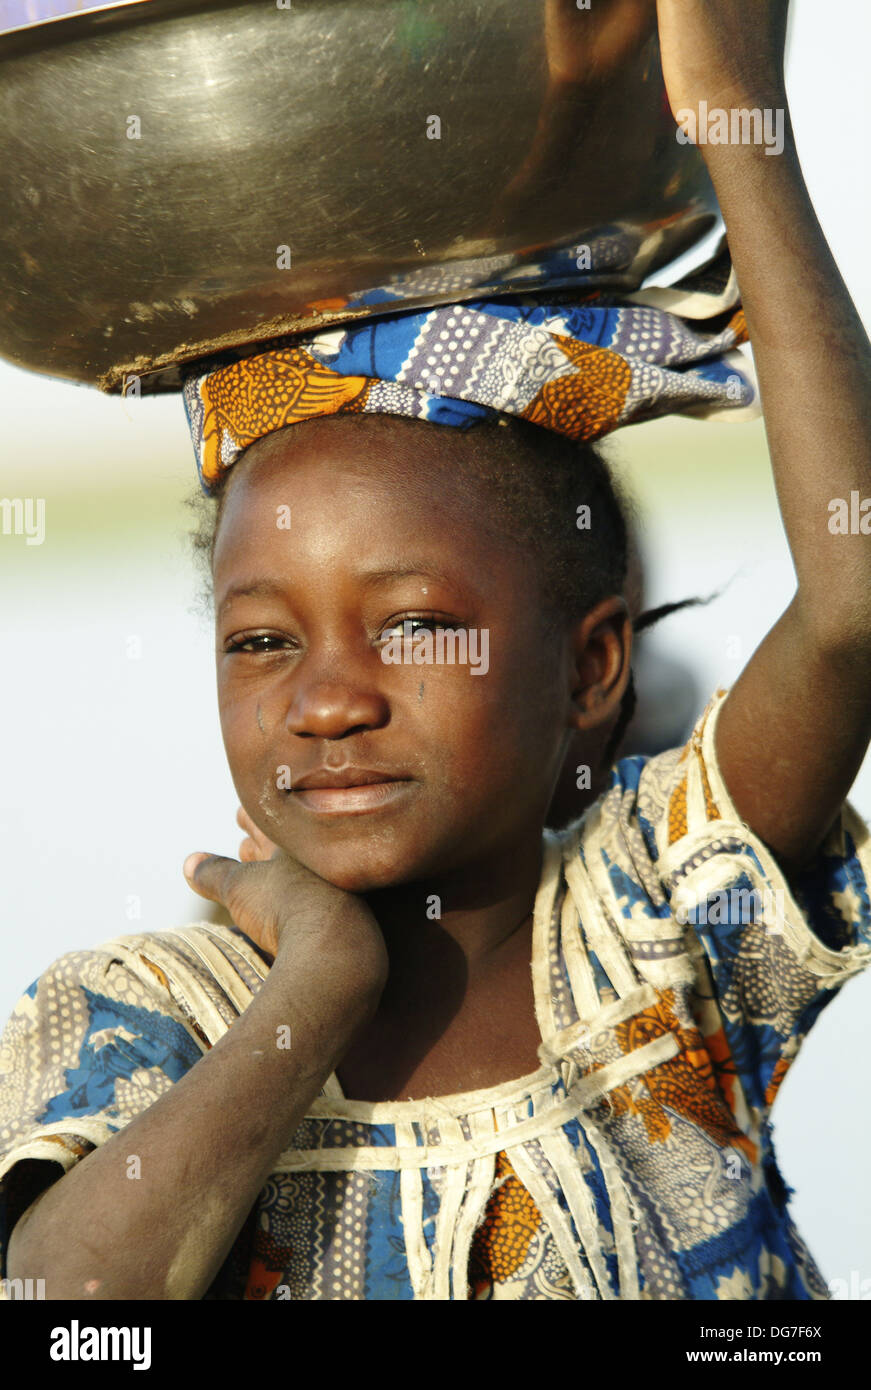 Gao, Mali Stock Photo - Alamy